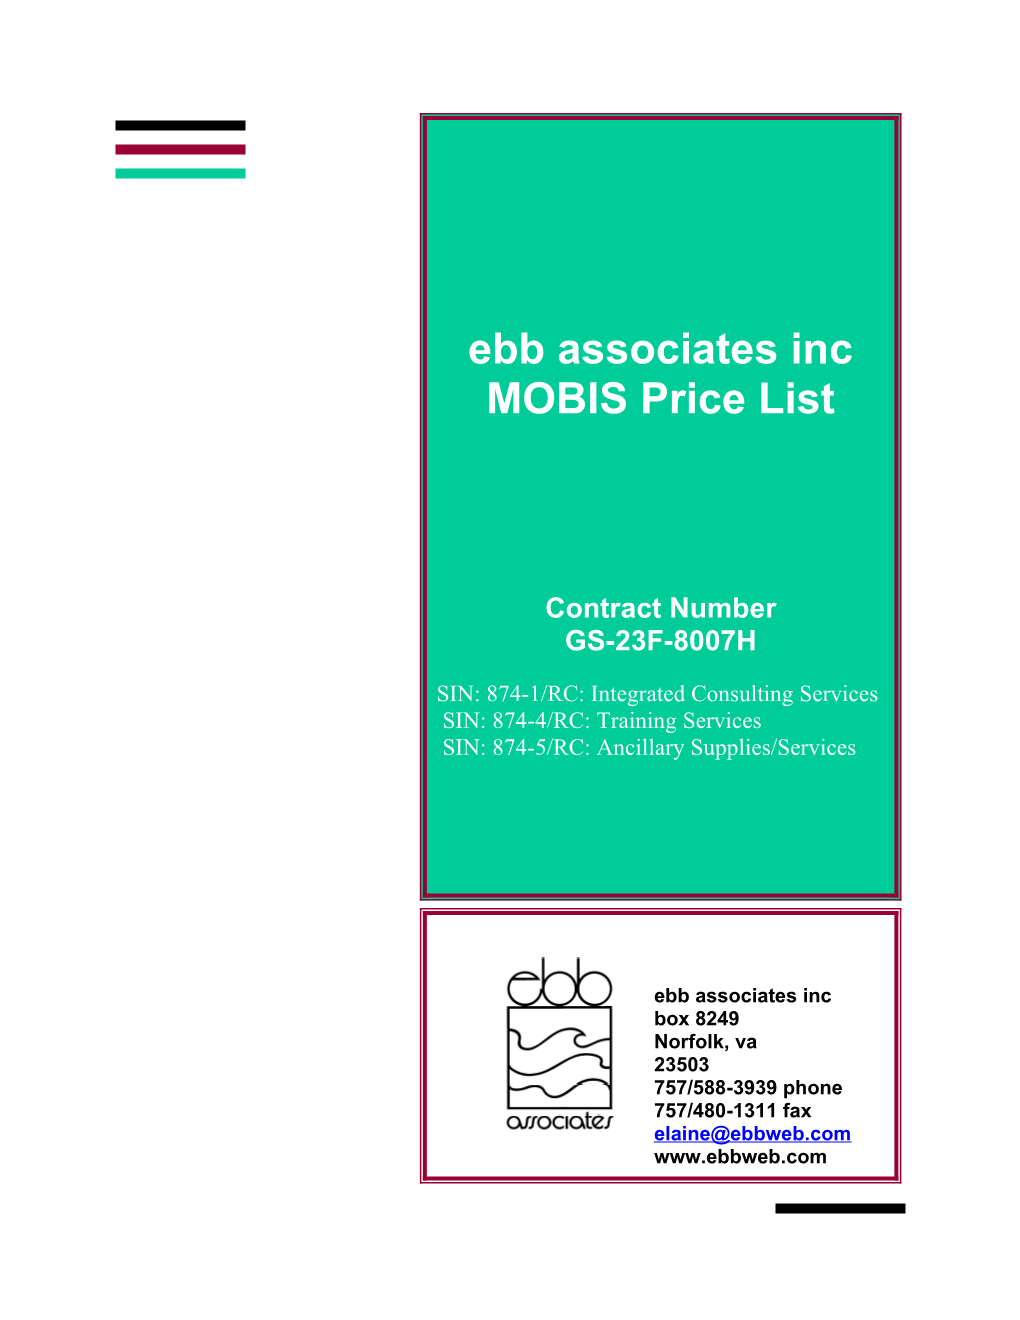 Introducing Ebb Associates